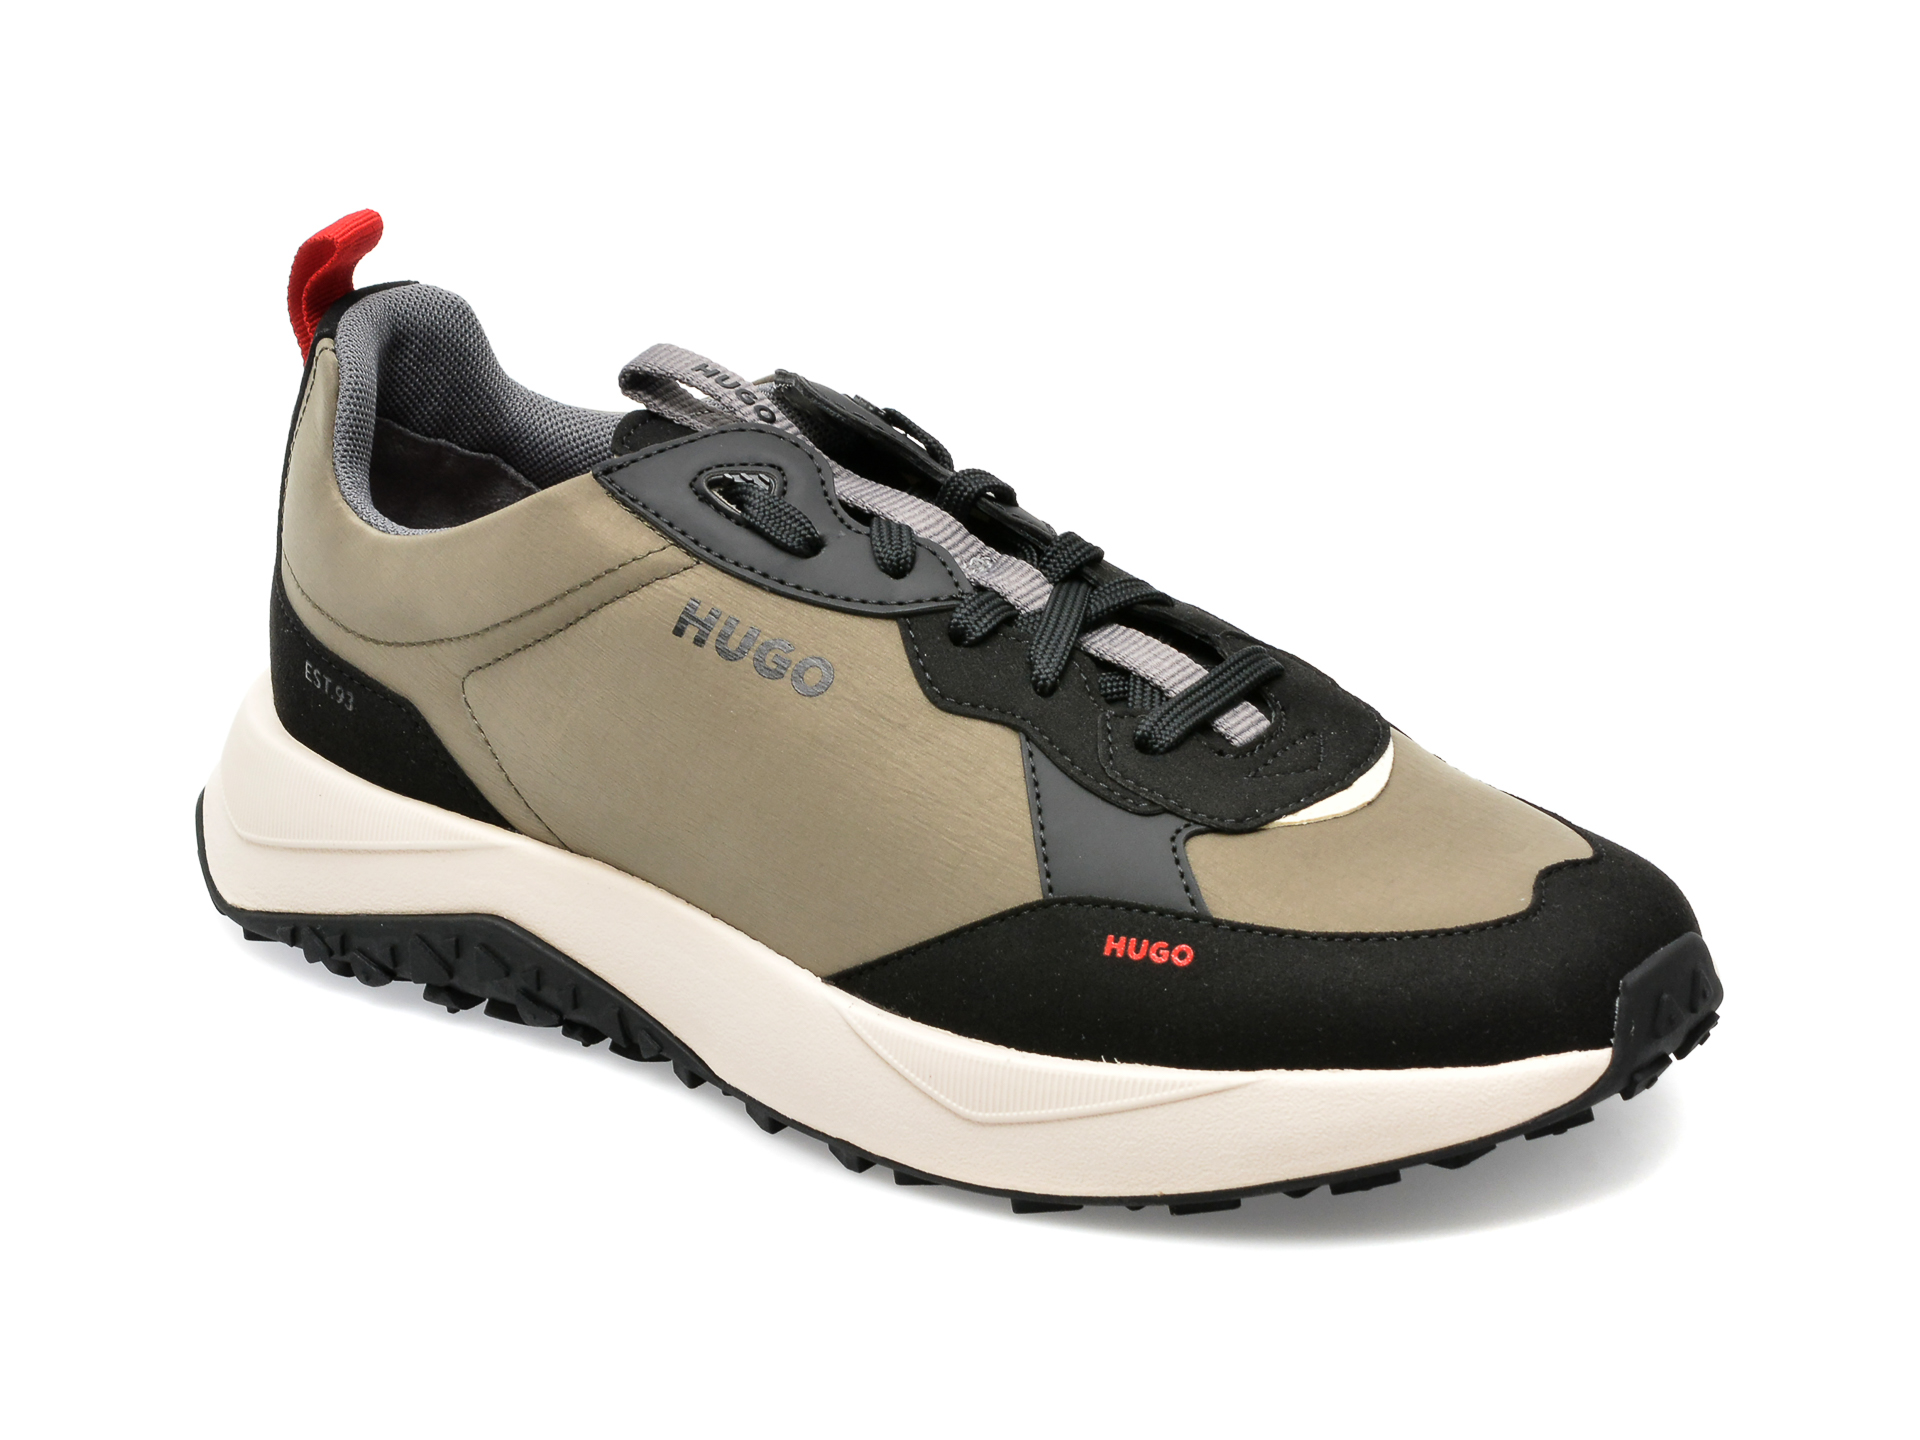 Pantofi HUGO kaki, 3146, din material textil si piele ecologica /barbati/pantofi